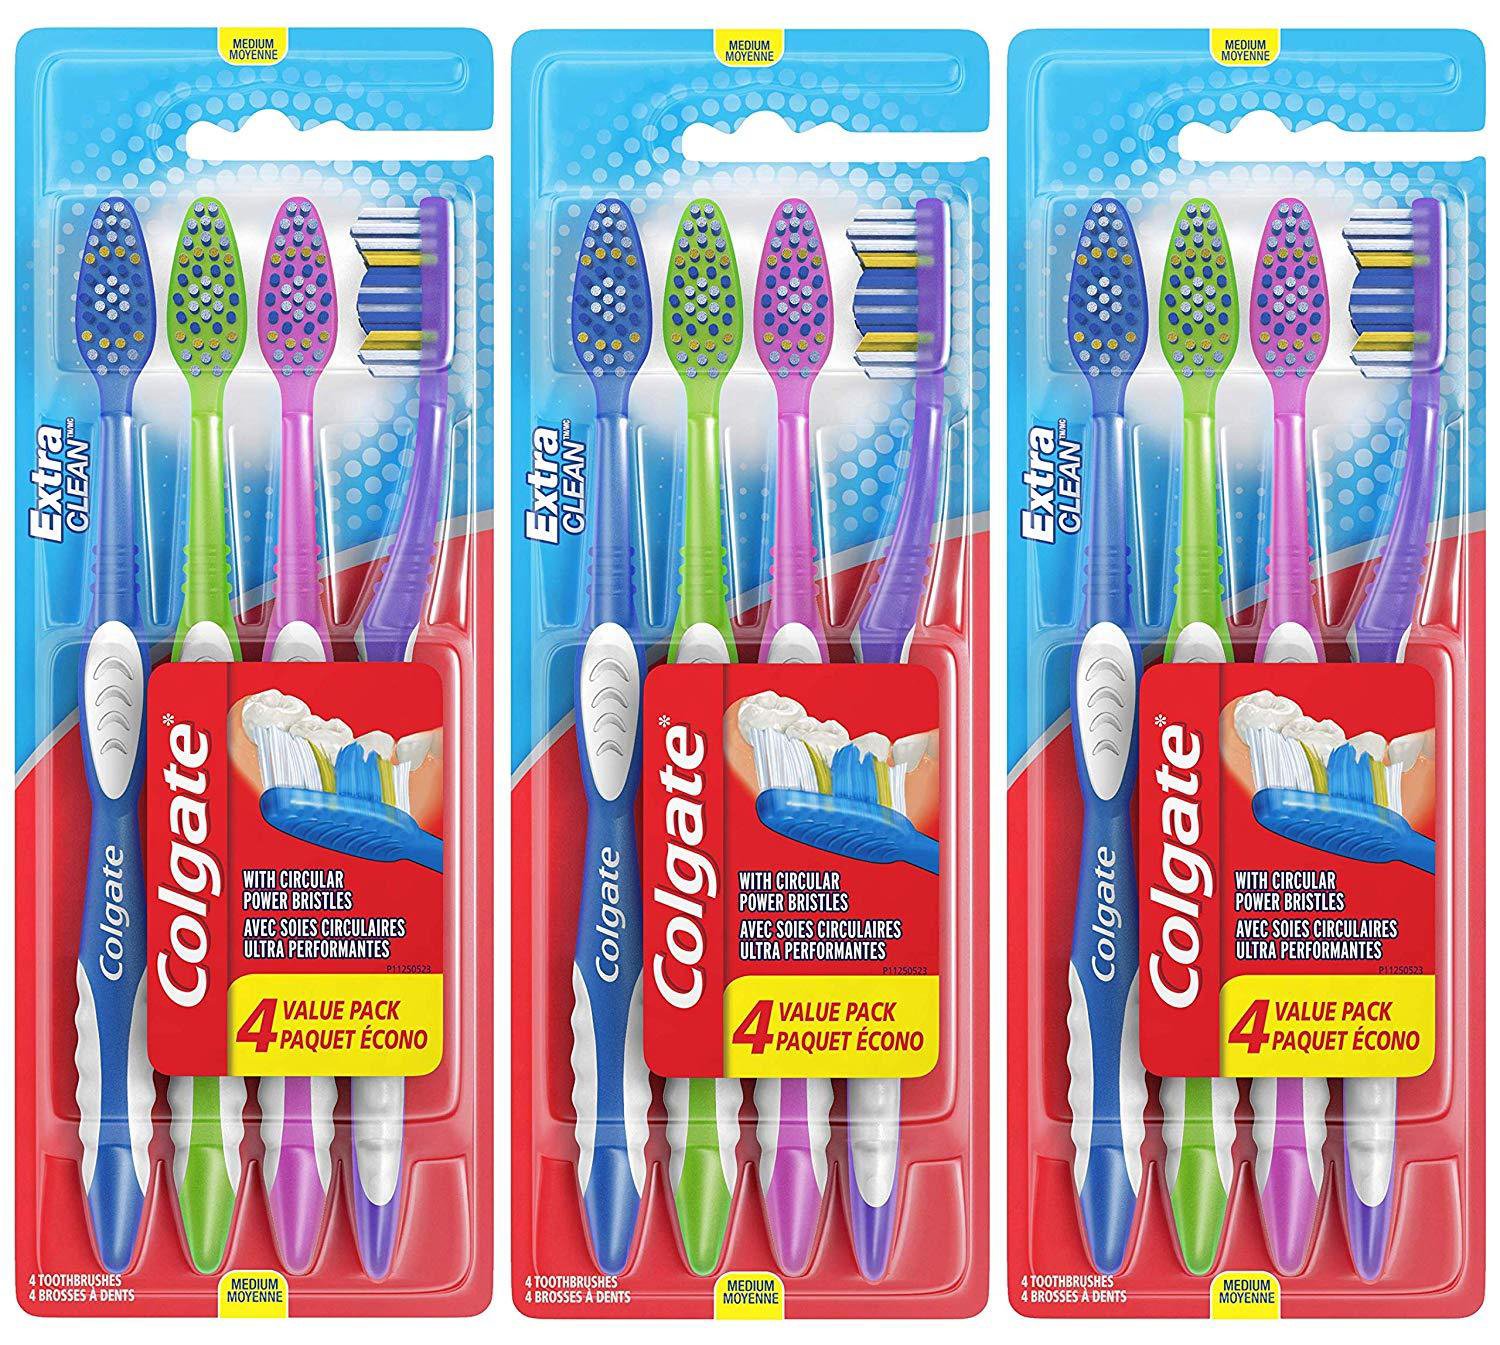 Colgate Plus Manual Medium Toothbrush, 1 Pack of 12